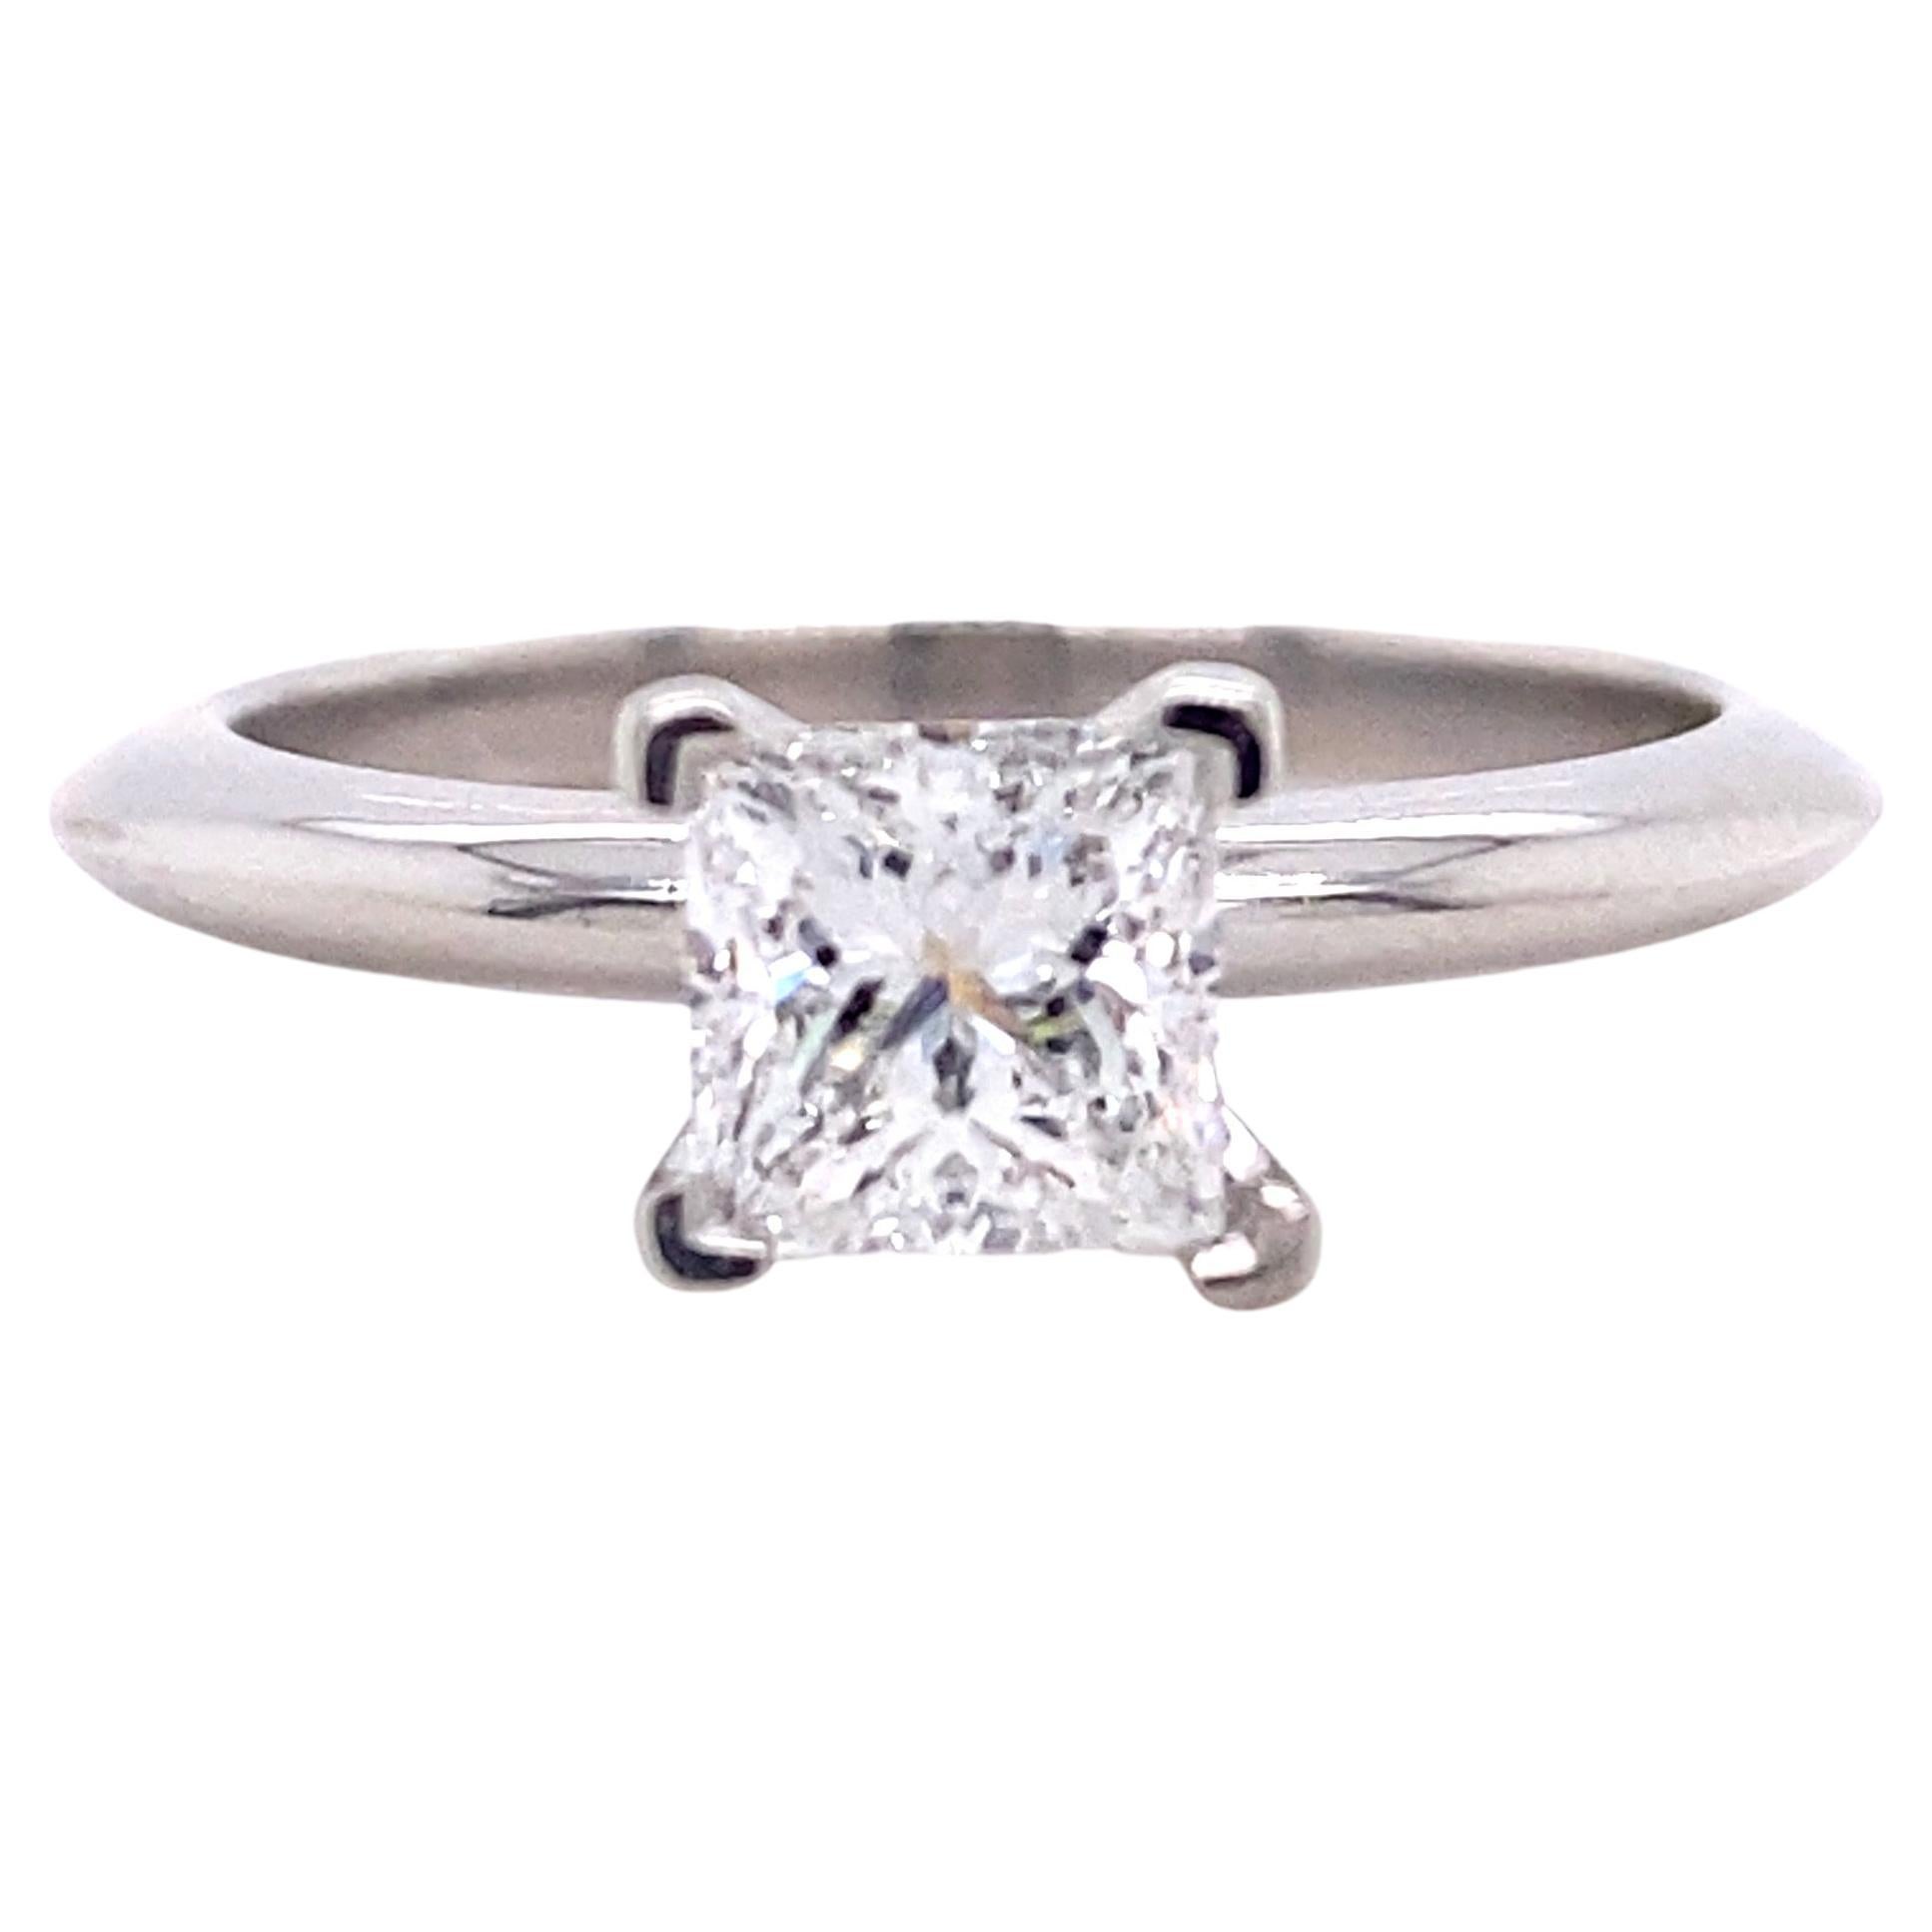 Tiffany & Co Princess Cut Diamond 0.73 Cts Solitaire Platinum Engagement Ring